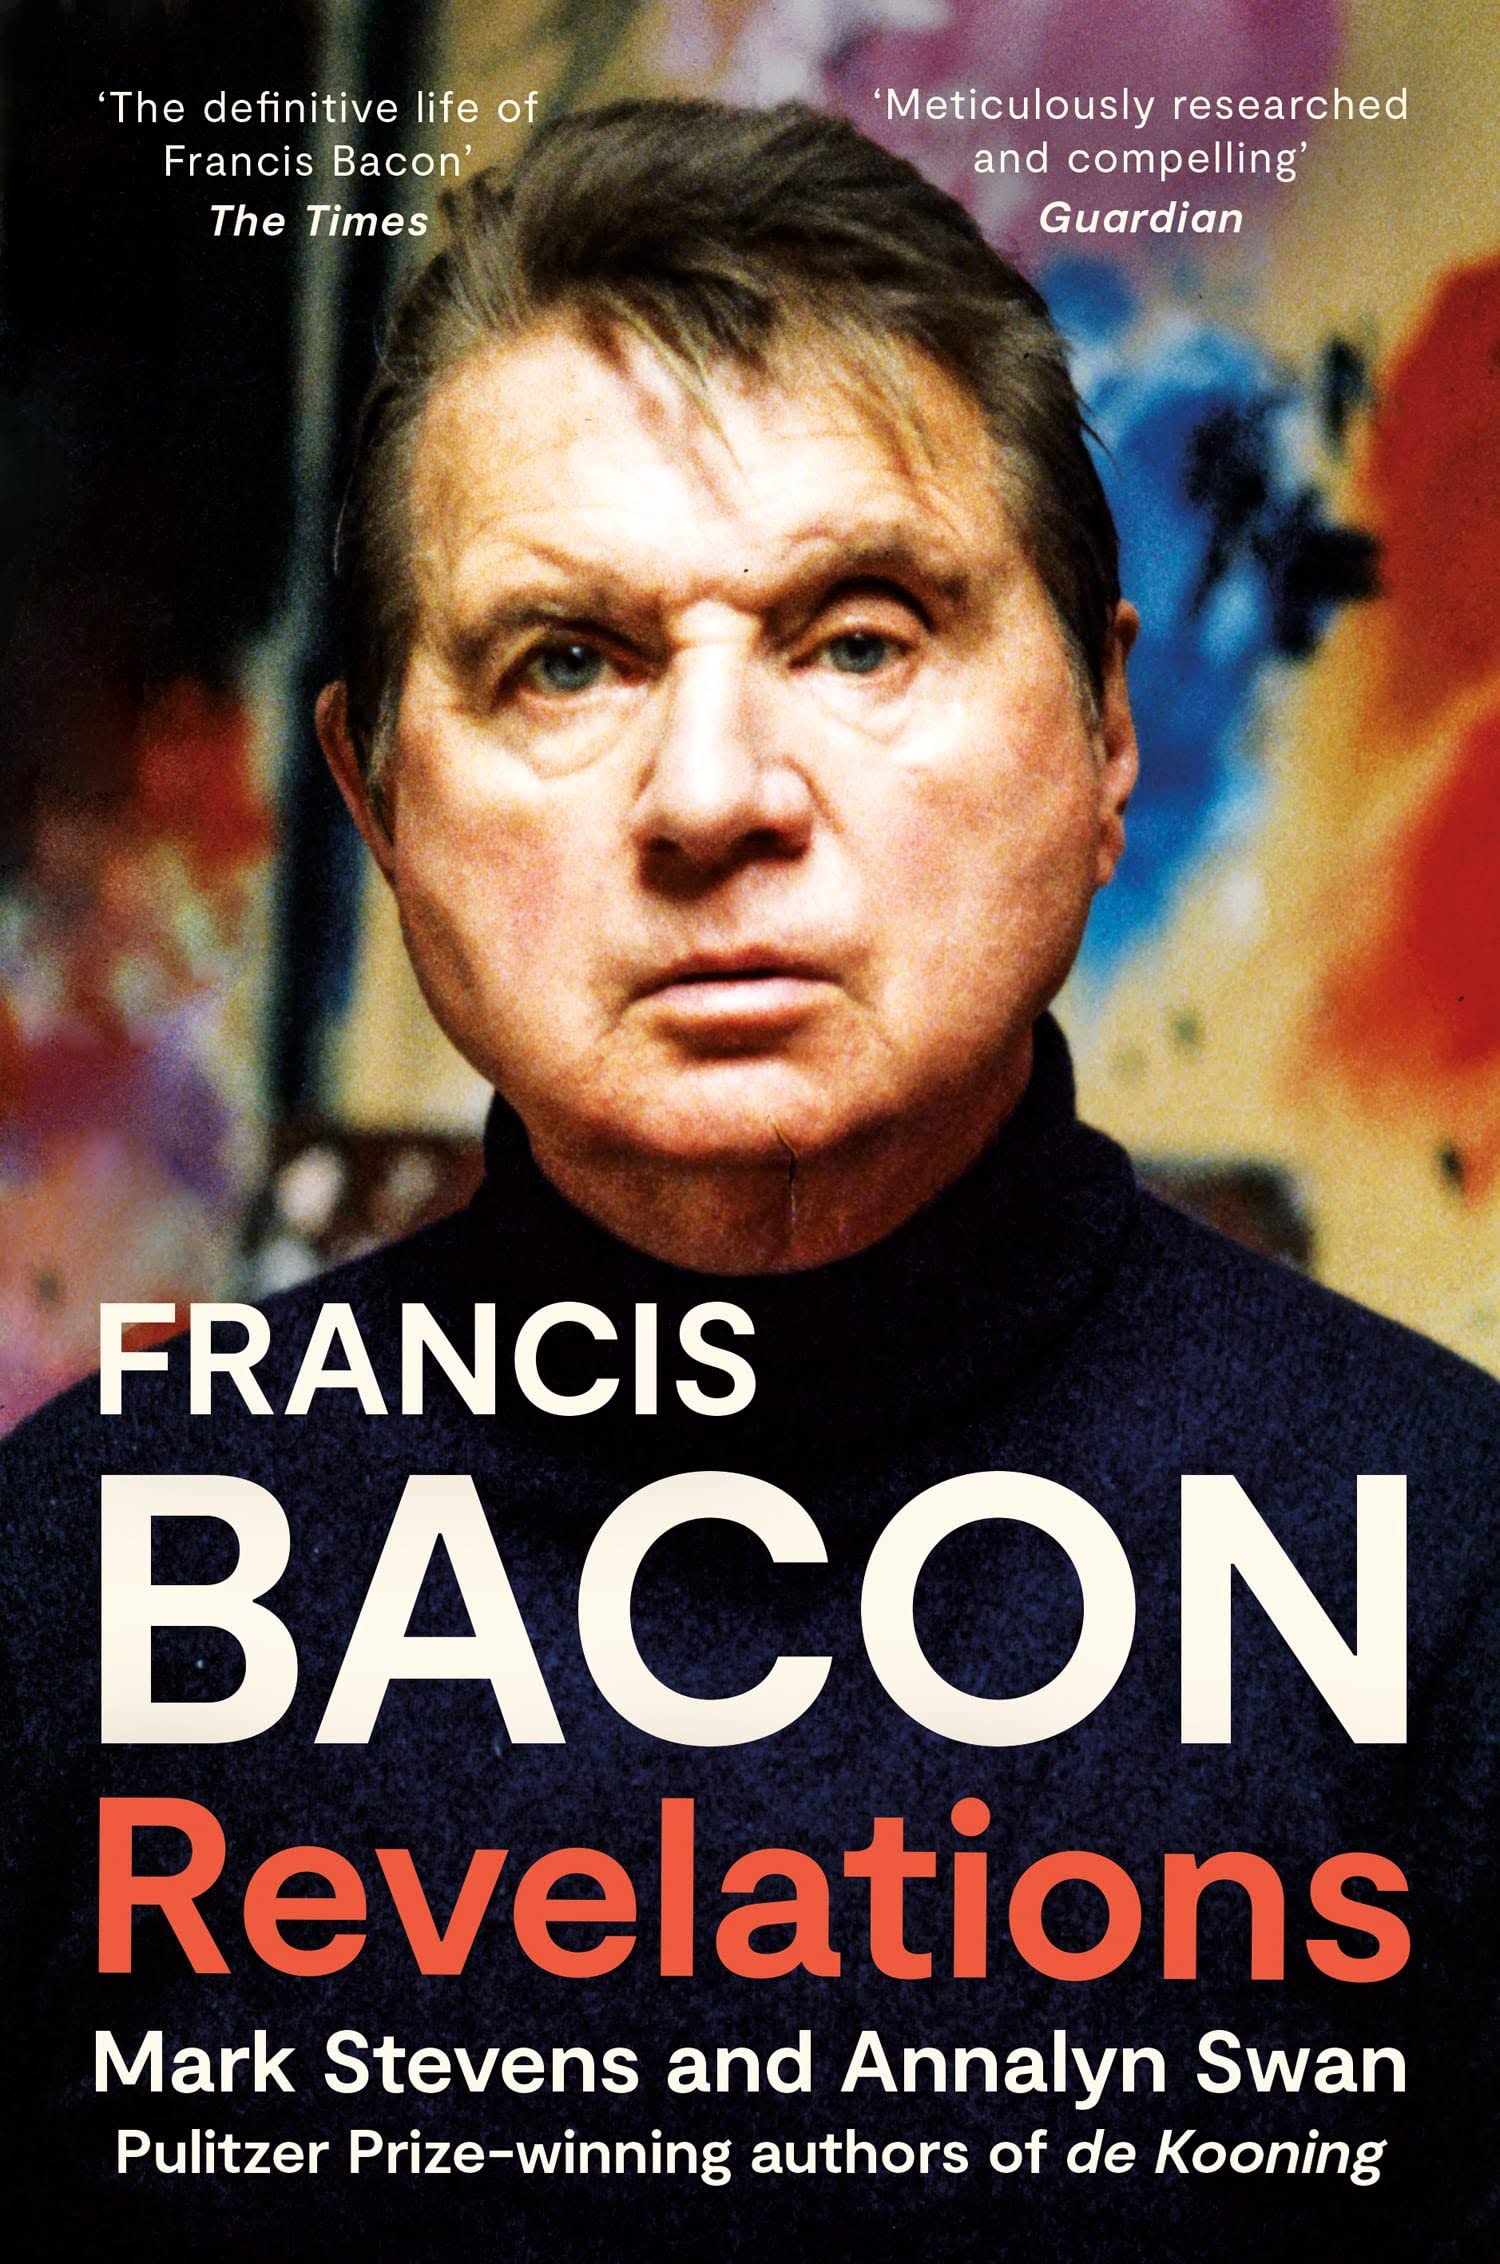 Francis Bacon by Mark Stevens